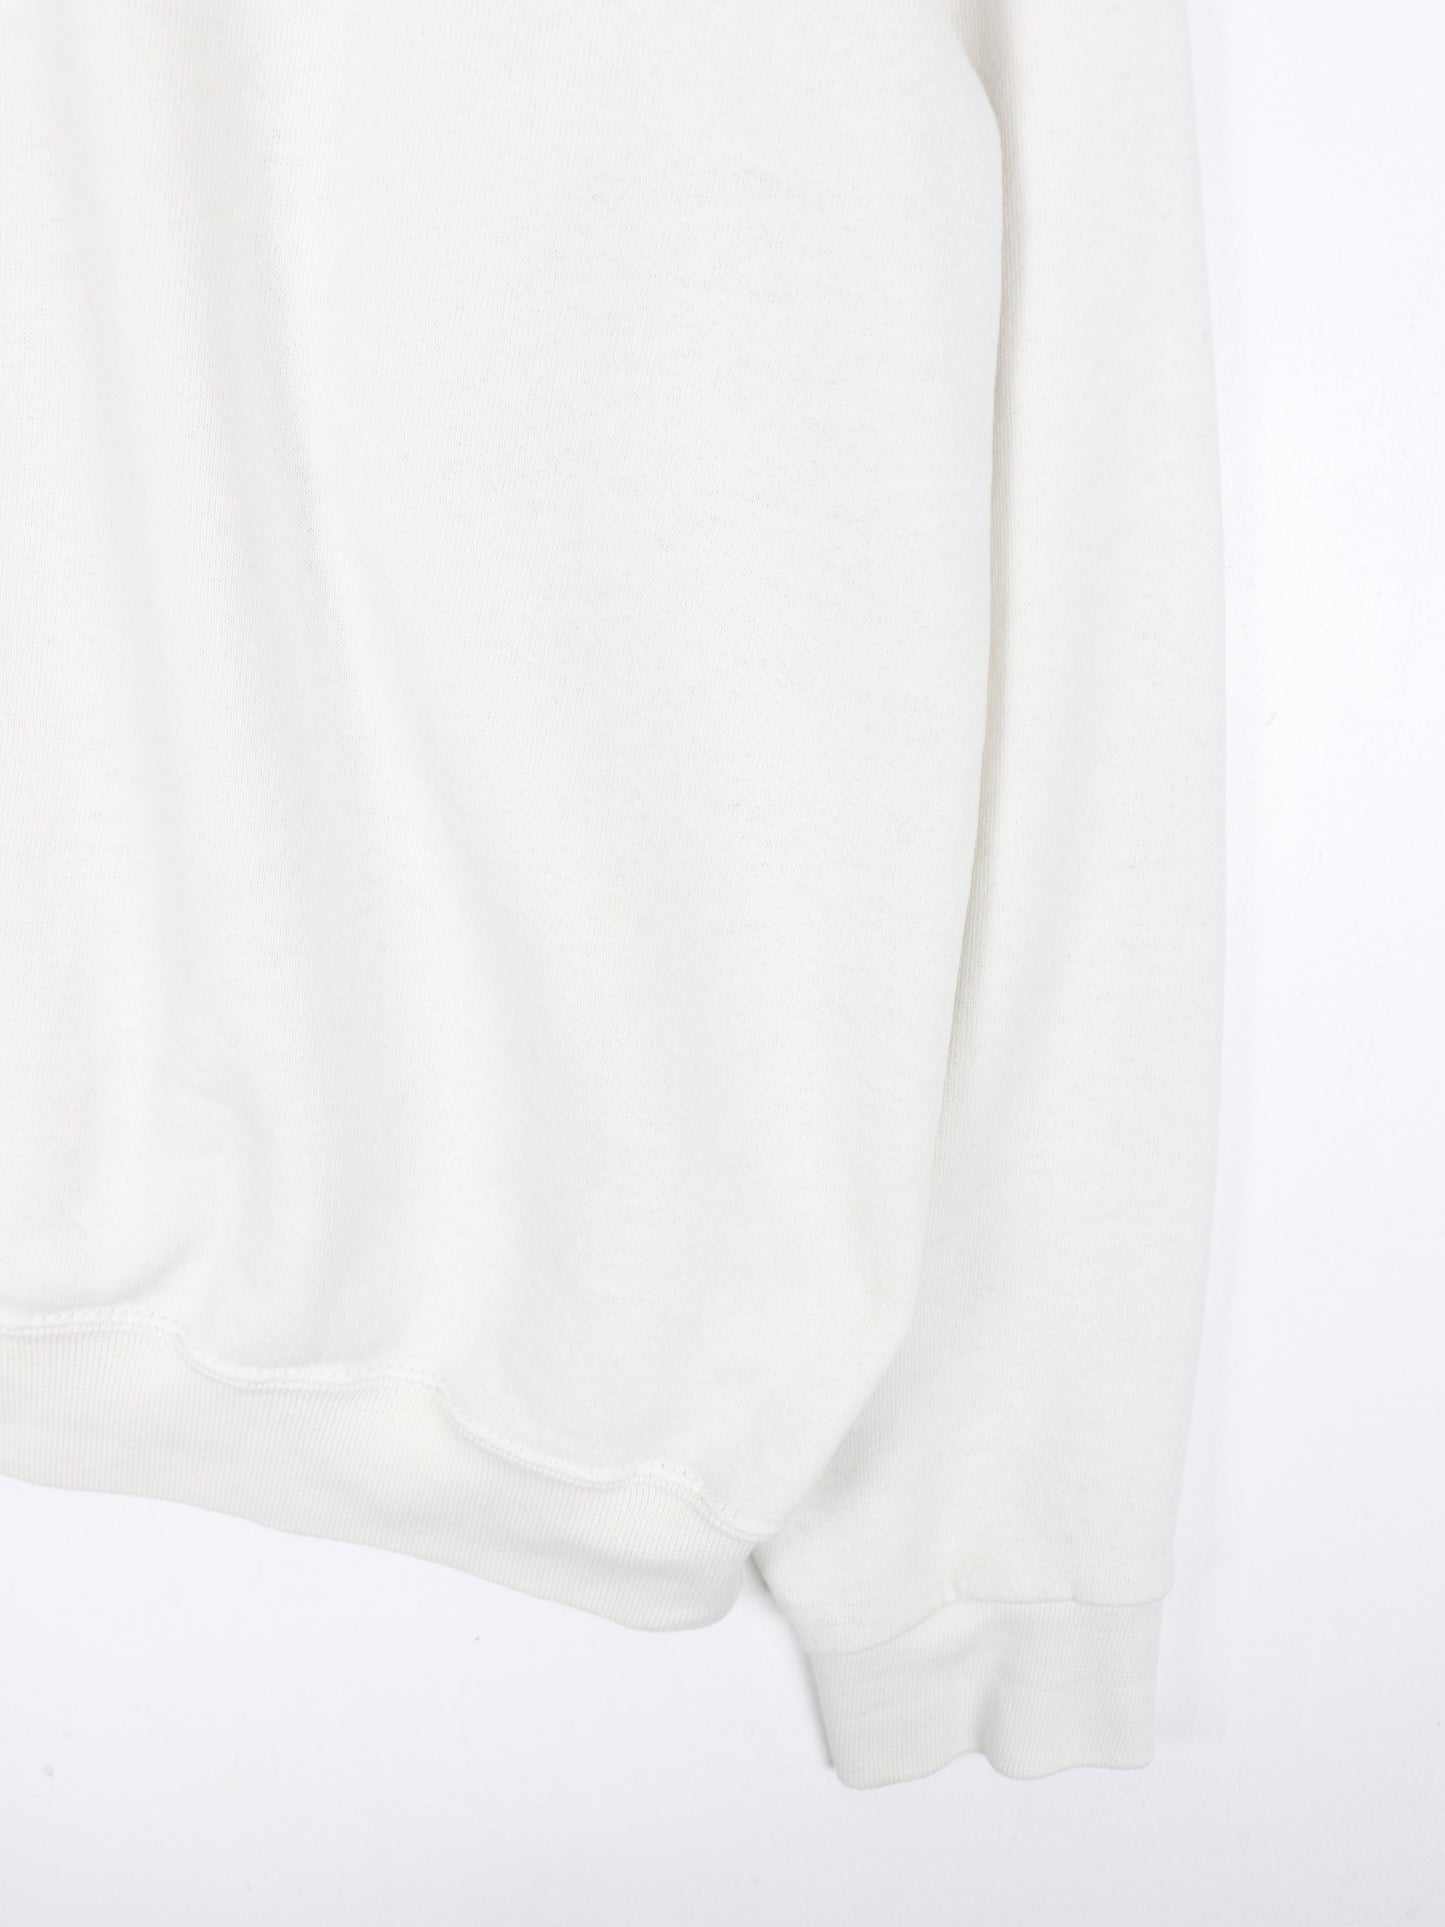 Vintage Please Lord Lottery Sweatshirt Mens XL White 90s